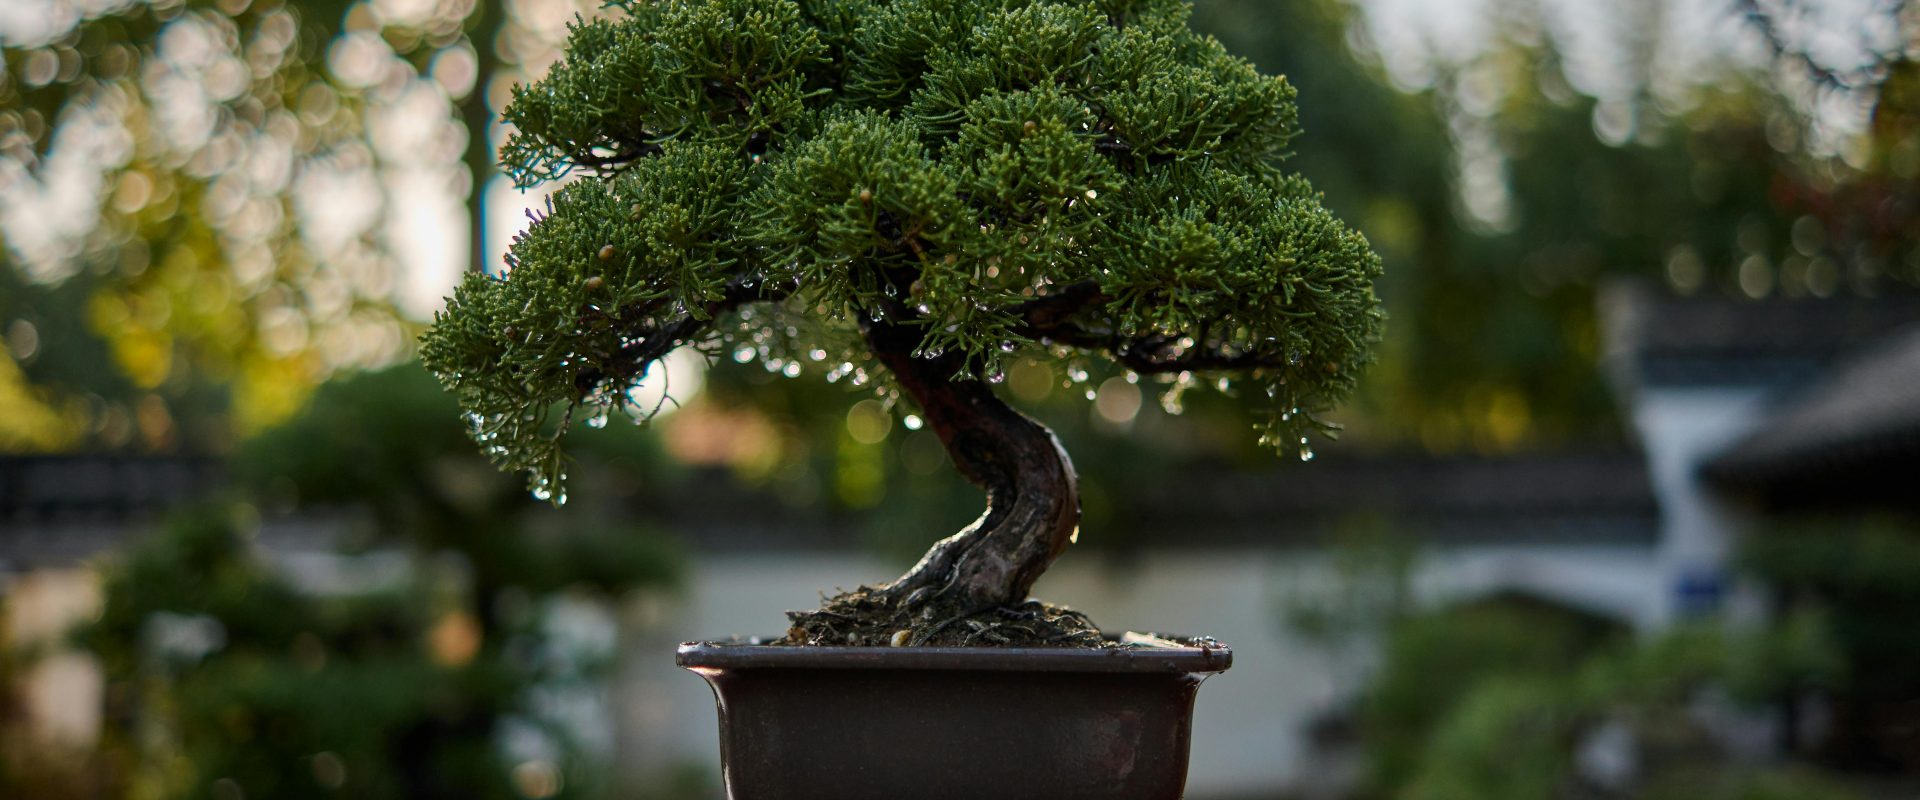 5 tips to grow a flourishing Bonsai tree